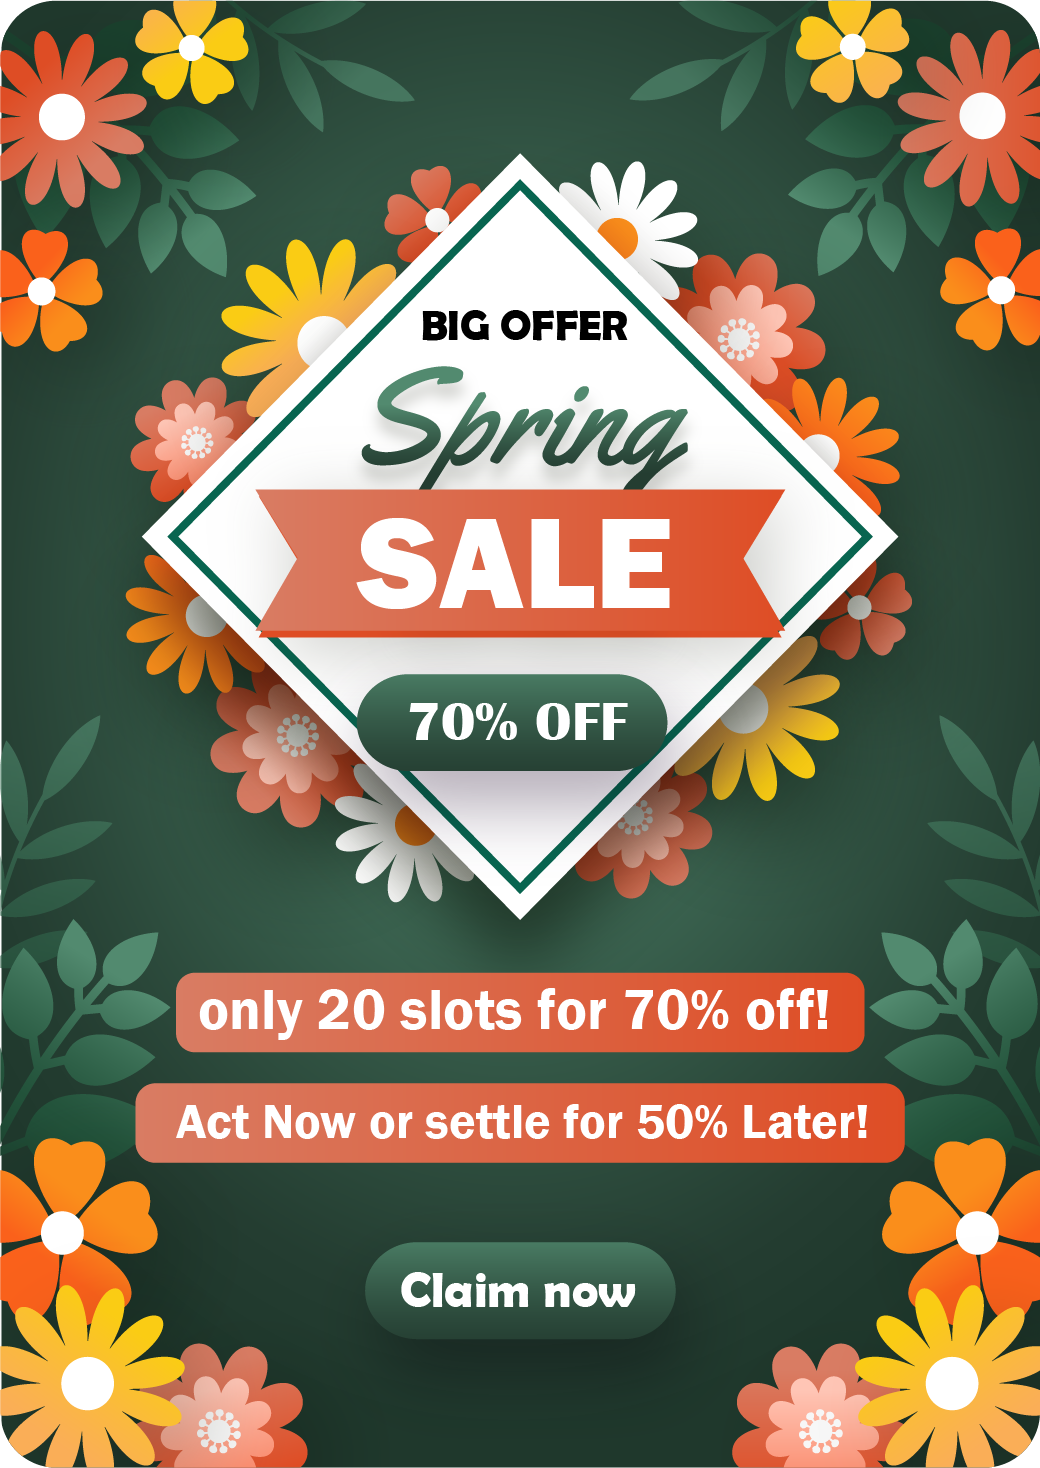 Spring Sale 70%